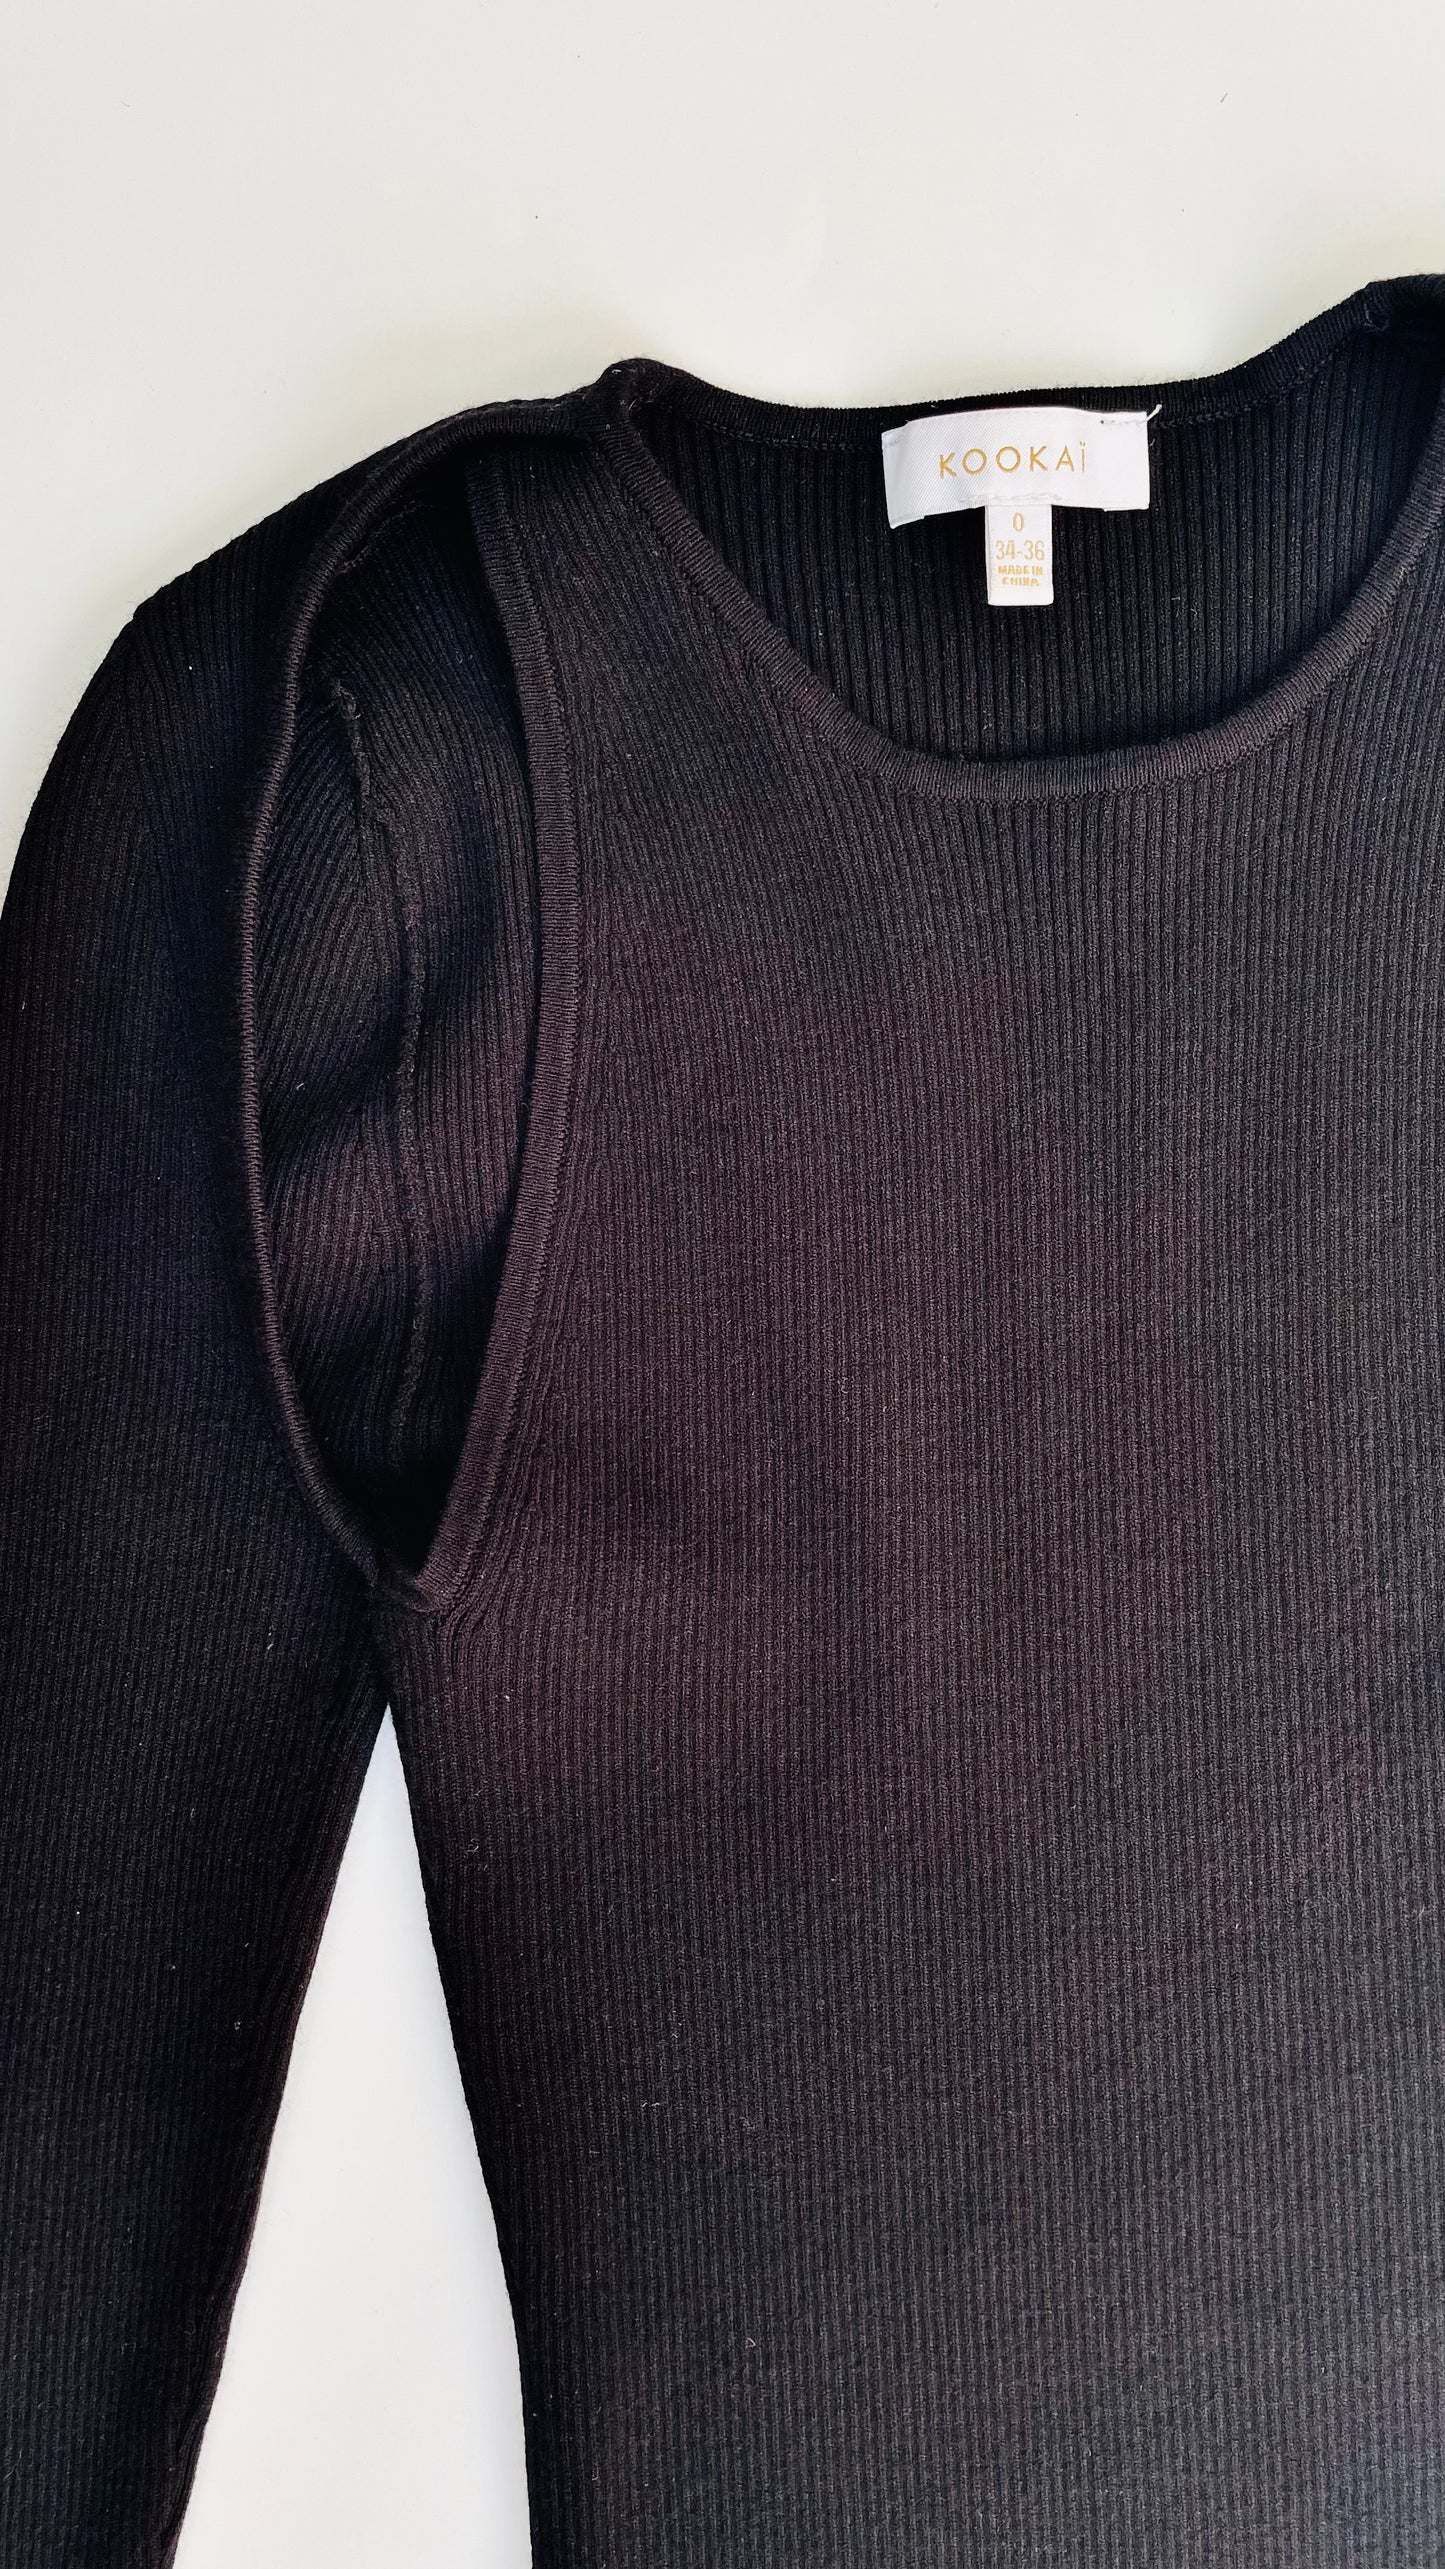 Pre-Loved KOOKAI black long sleeve rib knit top - Size 0